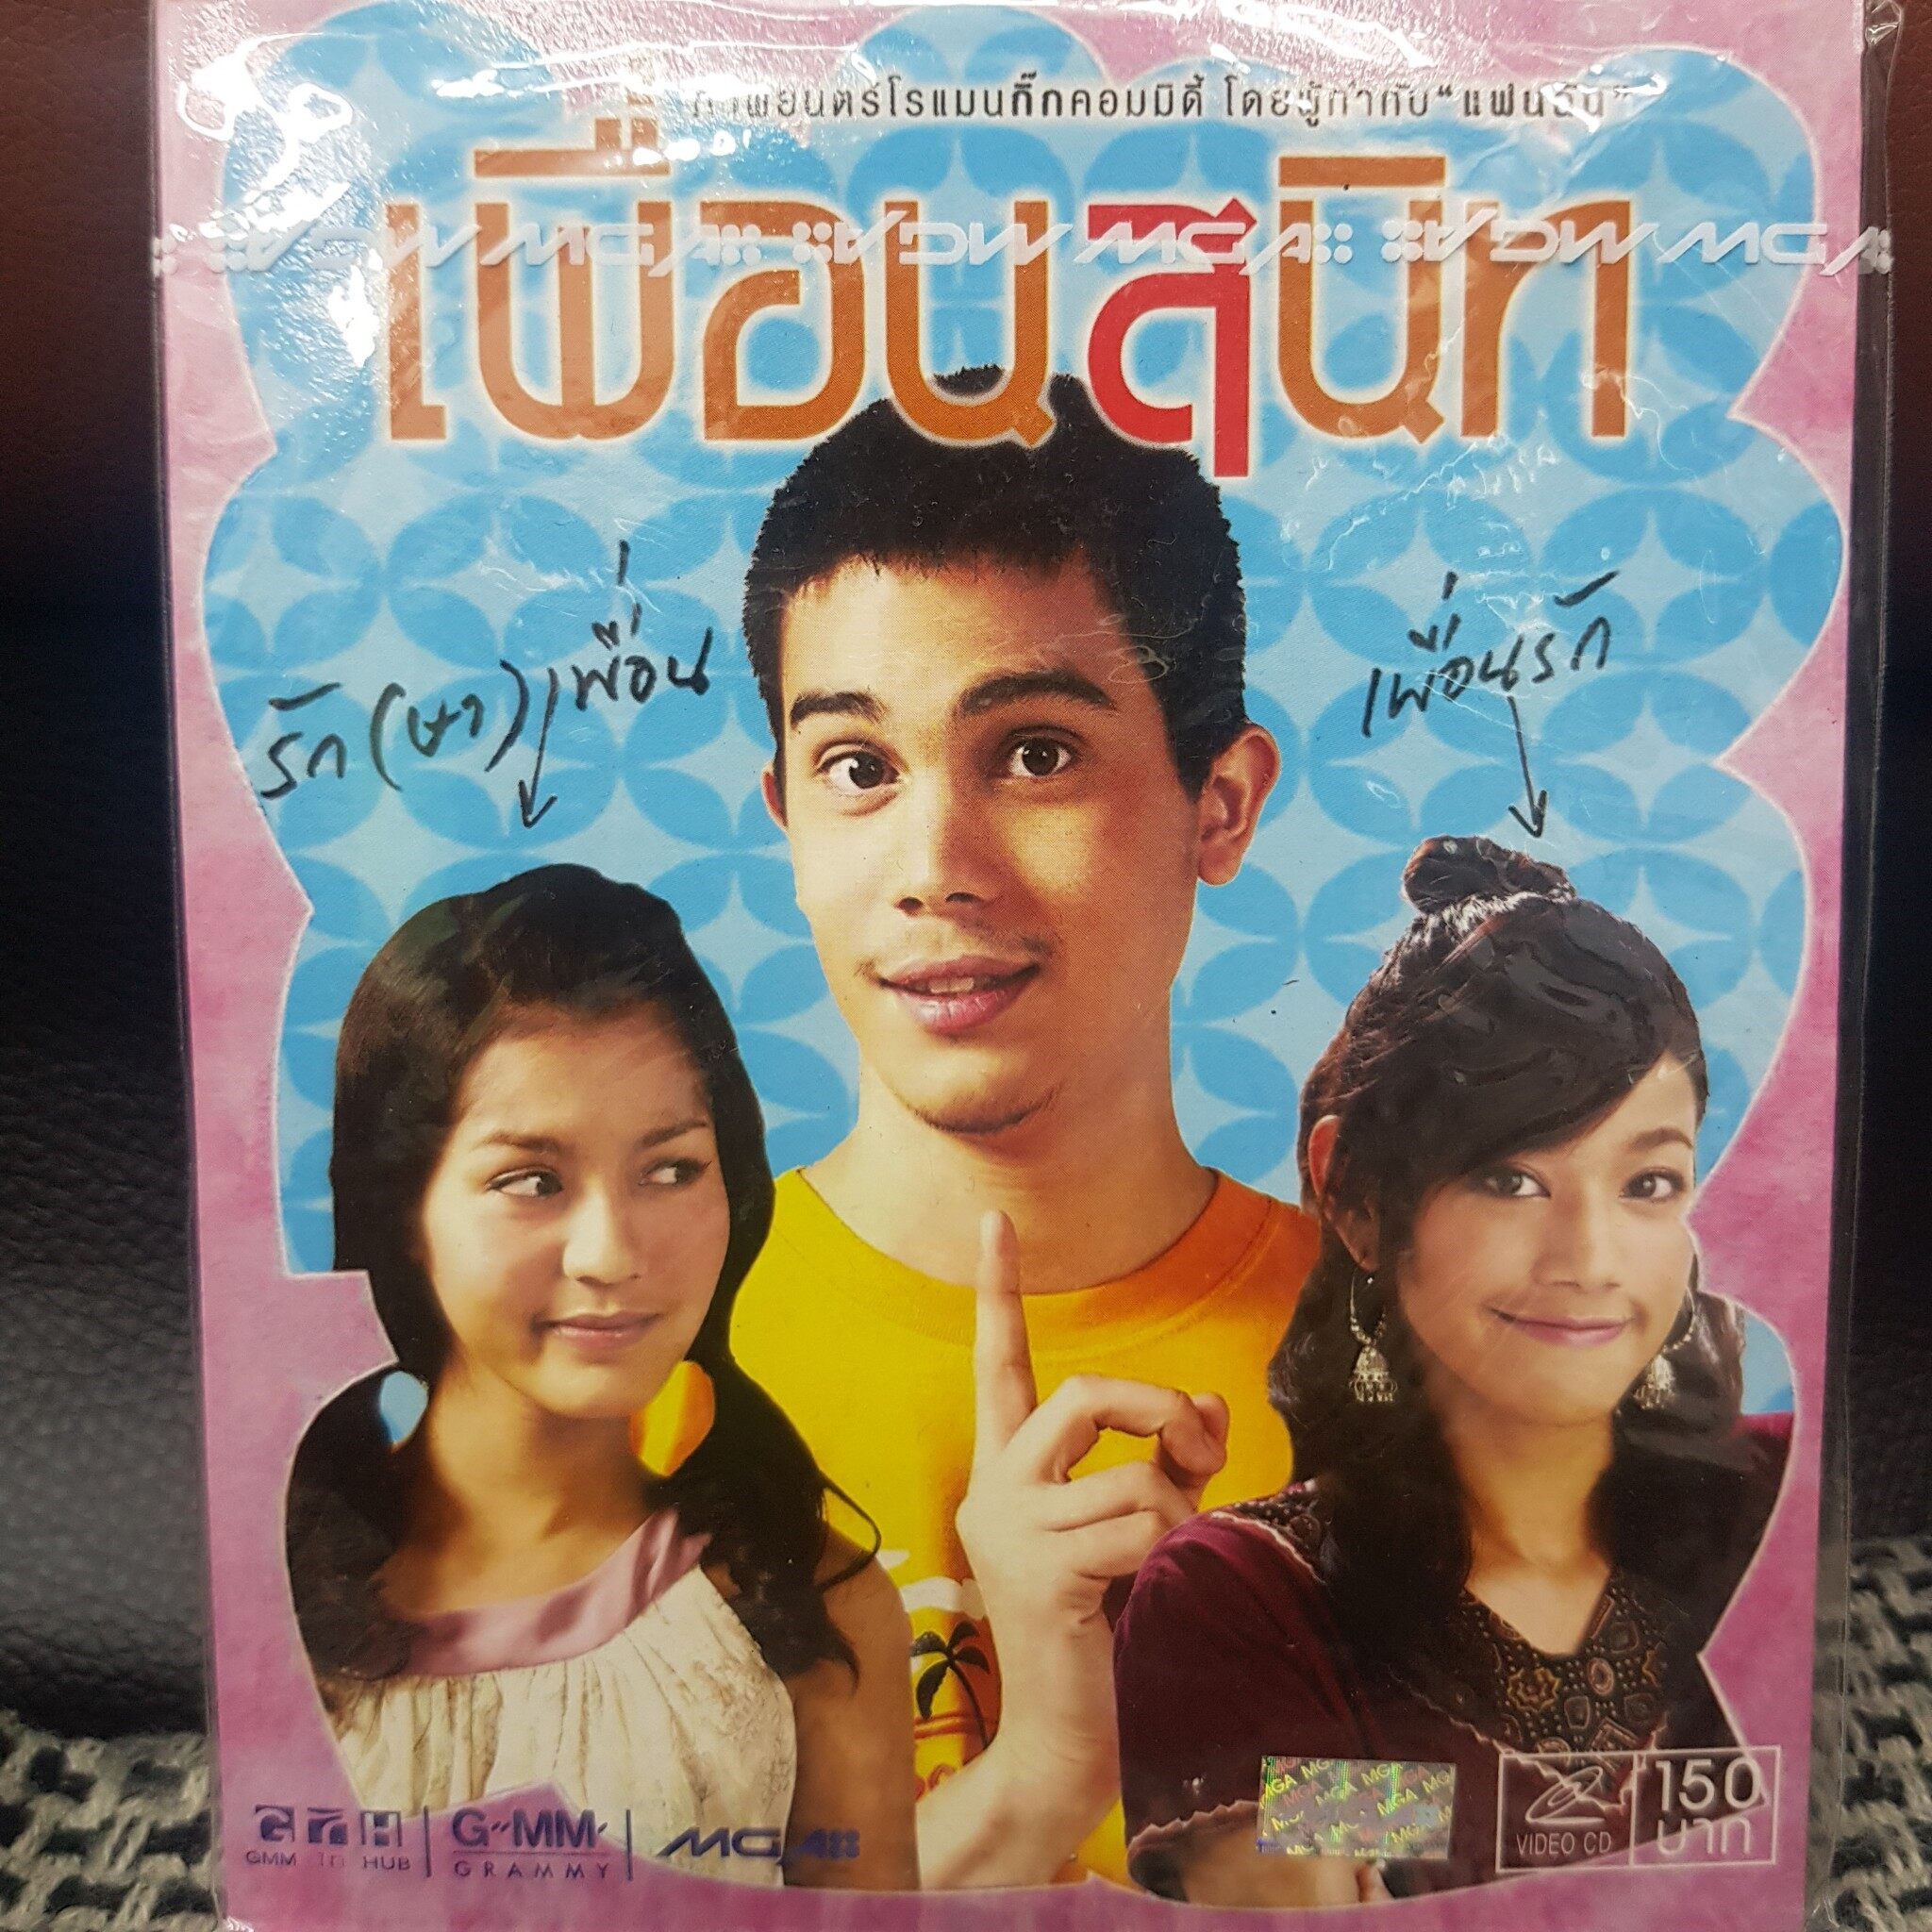 VCDหนัง เพื่อนสนิท พากย์ไทย (SBYVCD2020-เพื่อนสนิท) ไข่ย้อย เพื่อนสนิท โรแมนติก GTH แผ่นหนัง สะสม หนังโรงภาพยนตร์ ภาพยนตร์ หนังไทยเก่า หนัง งาน2020 cinema vcd วีซีดี STARMART